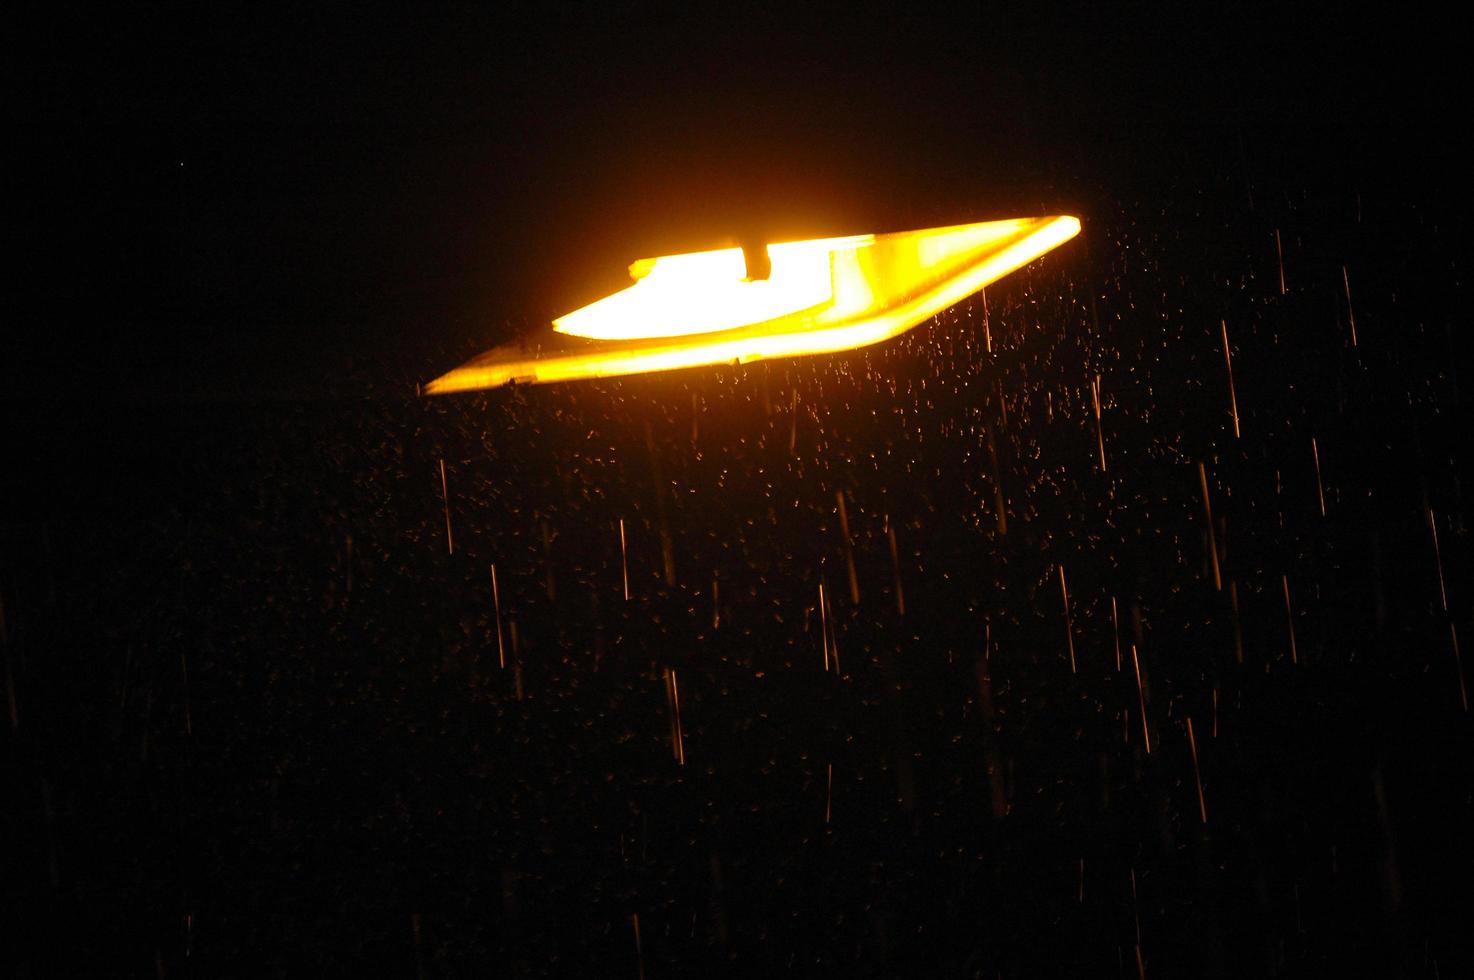 Street lamp on a rainy night photo